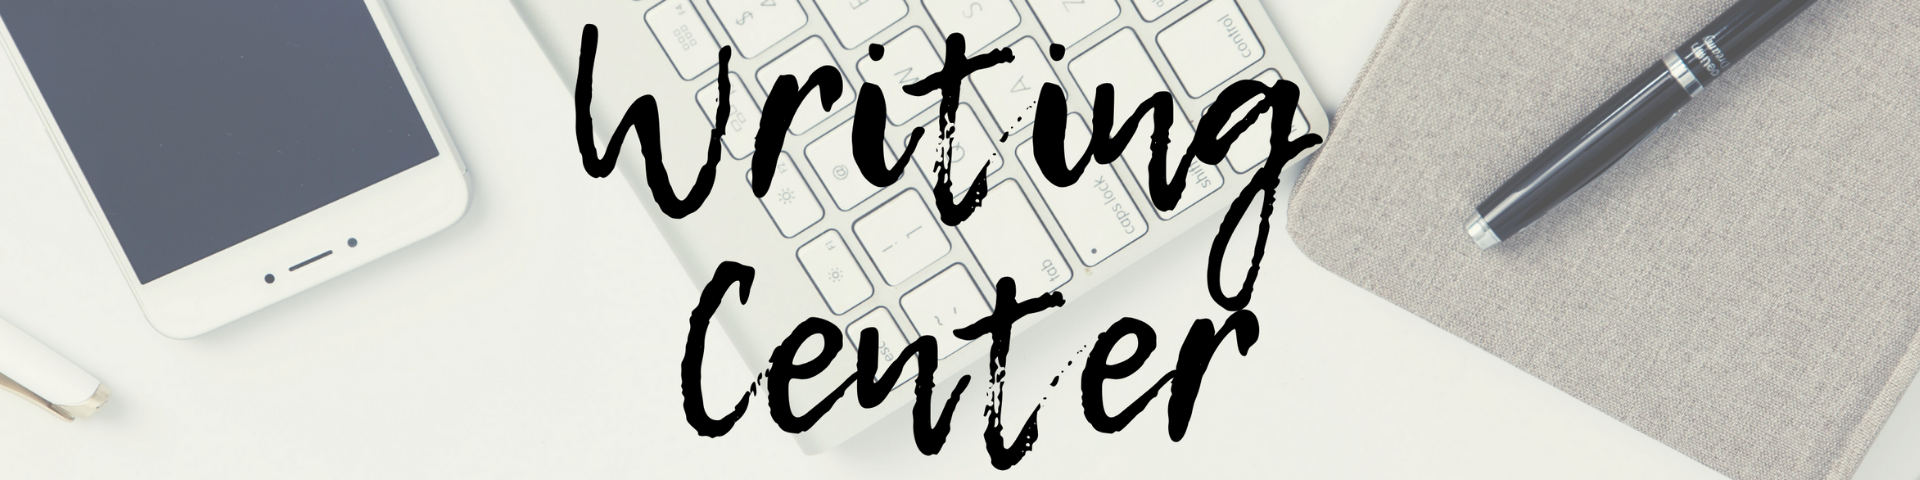 Writing_Center